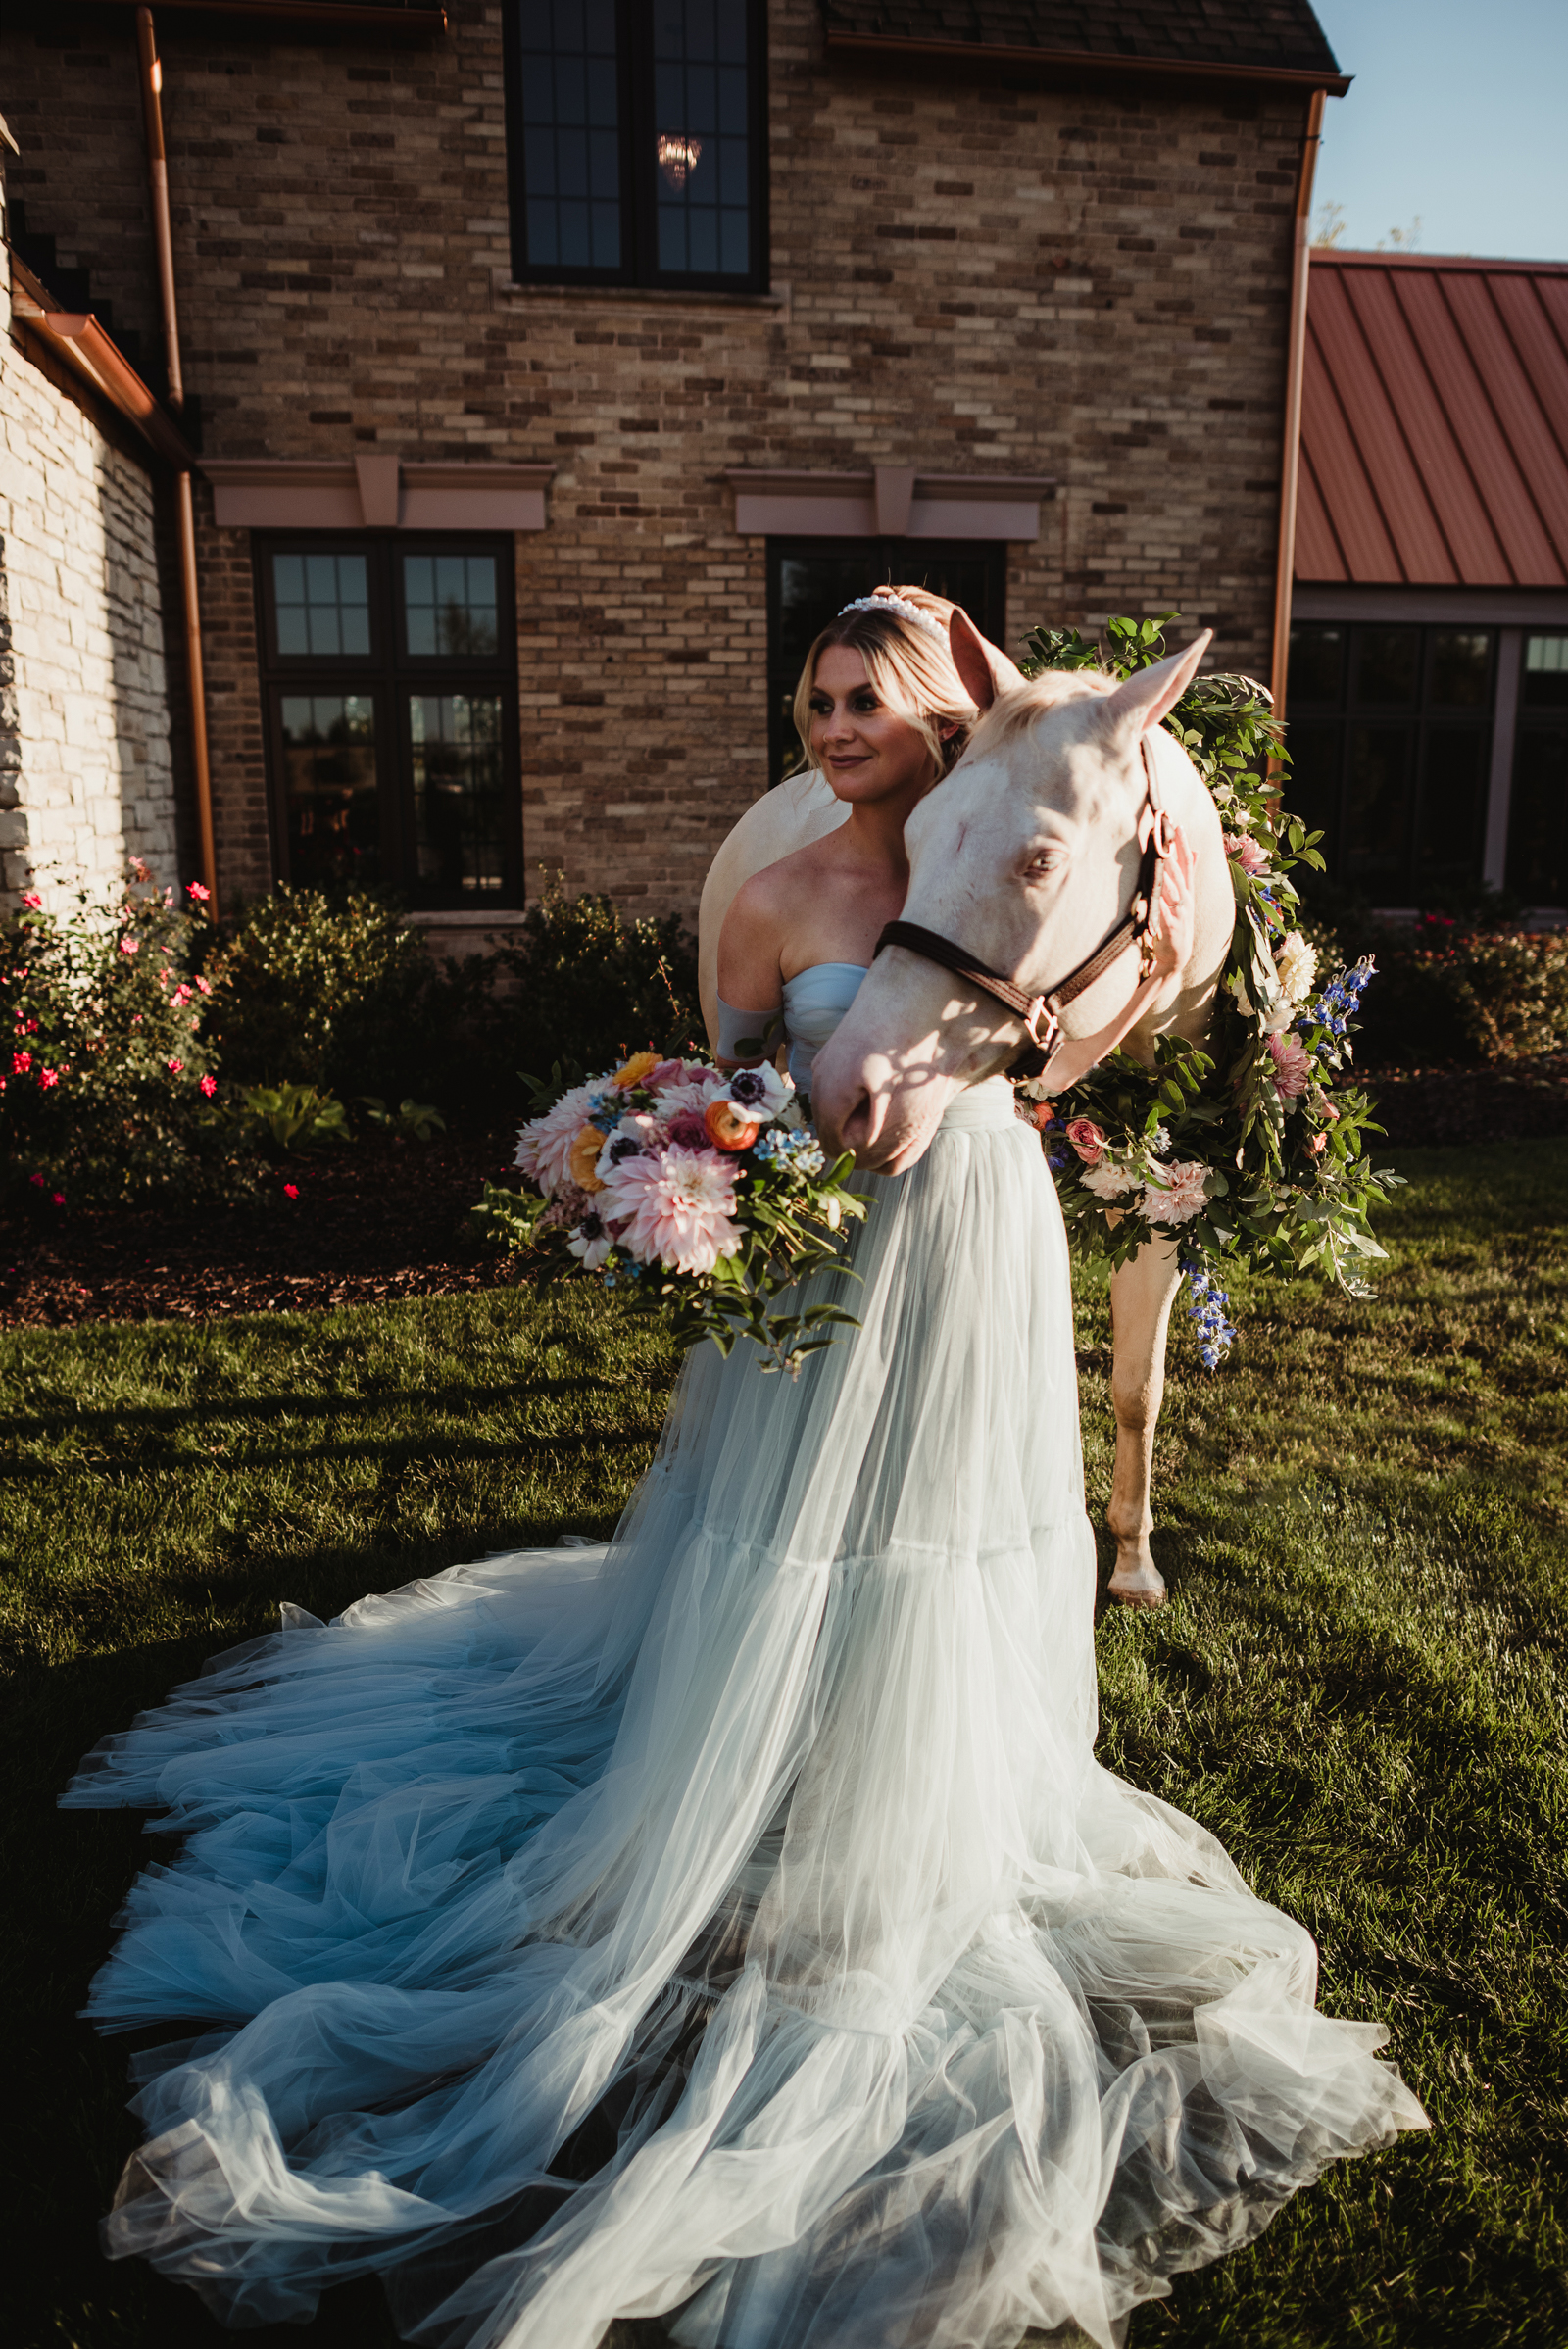 Cinderella Inspired Wedding Venue 3 Two Grand Rapids Wedding Venue Something Blue Weddings